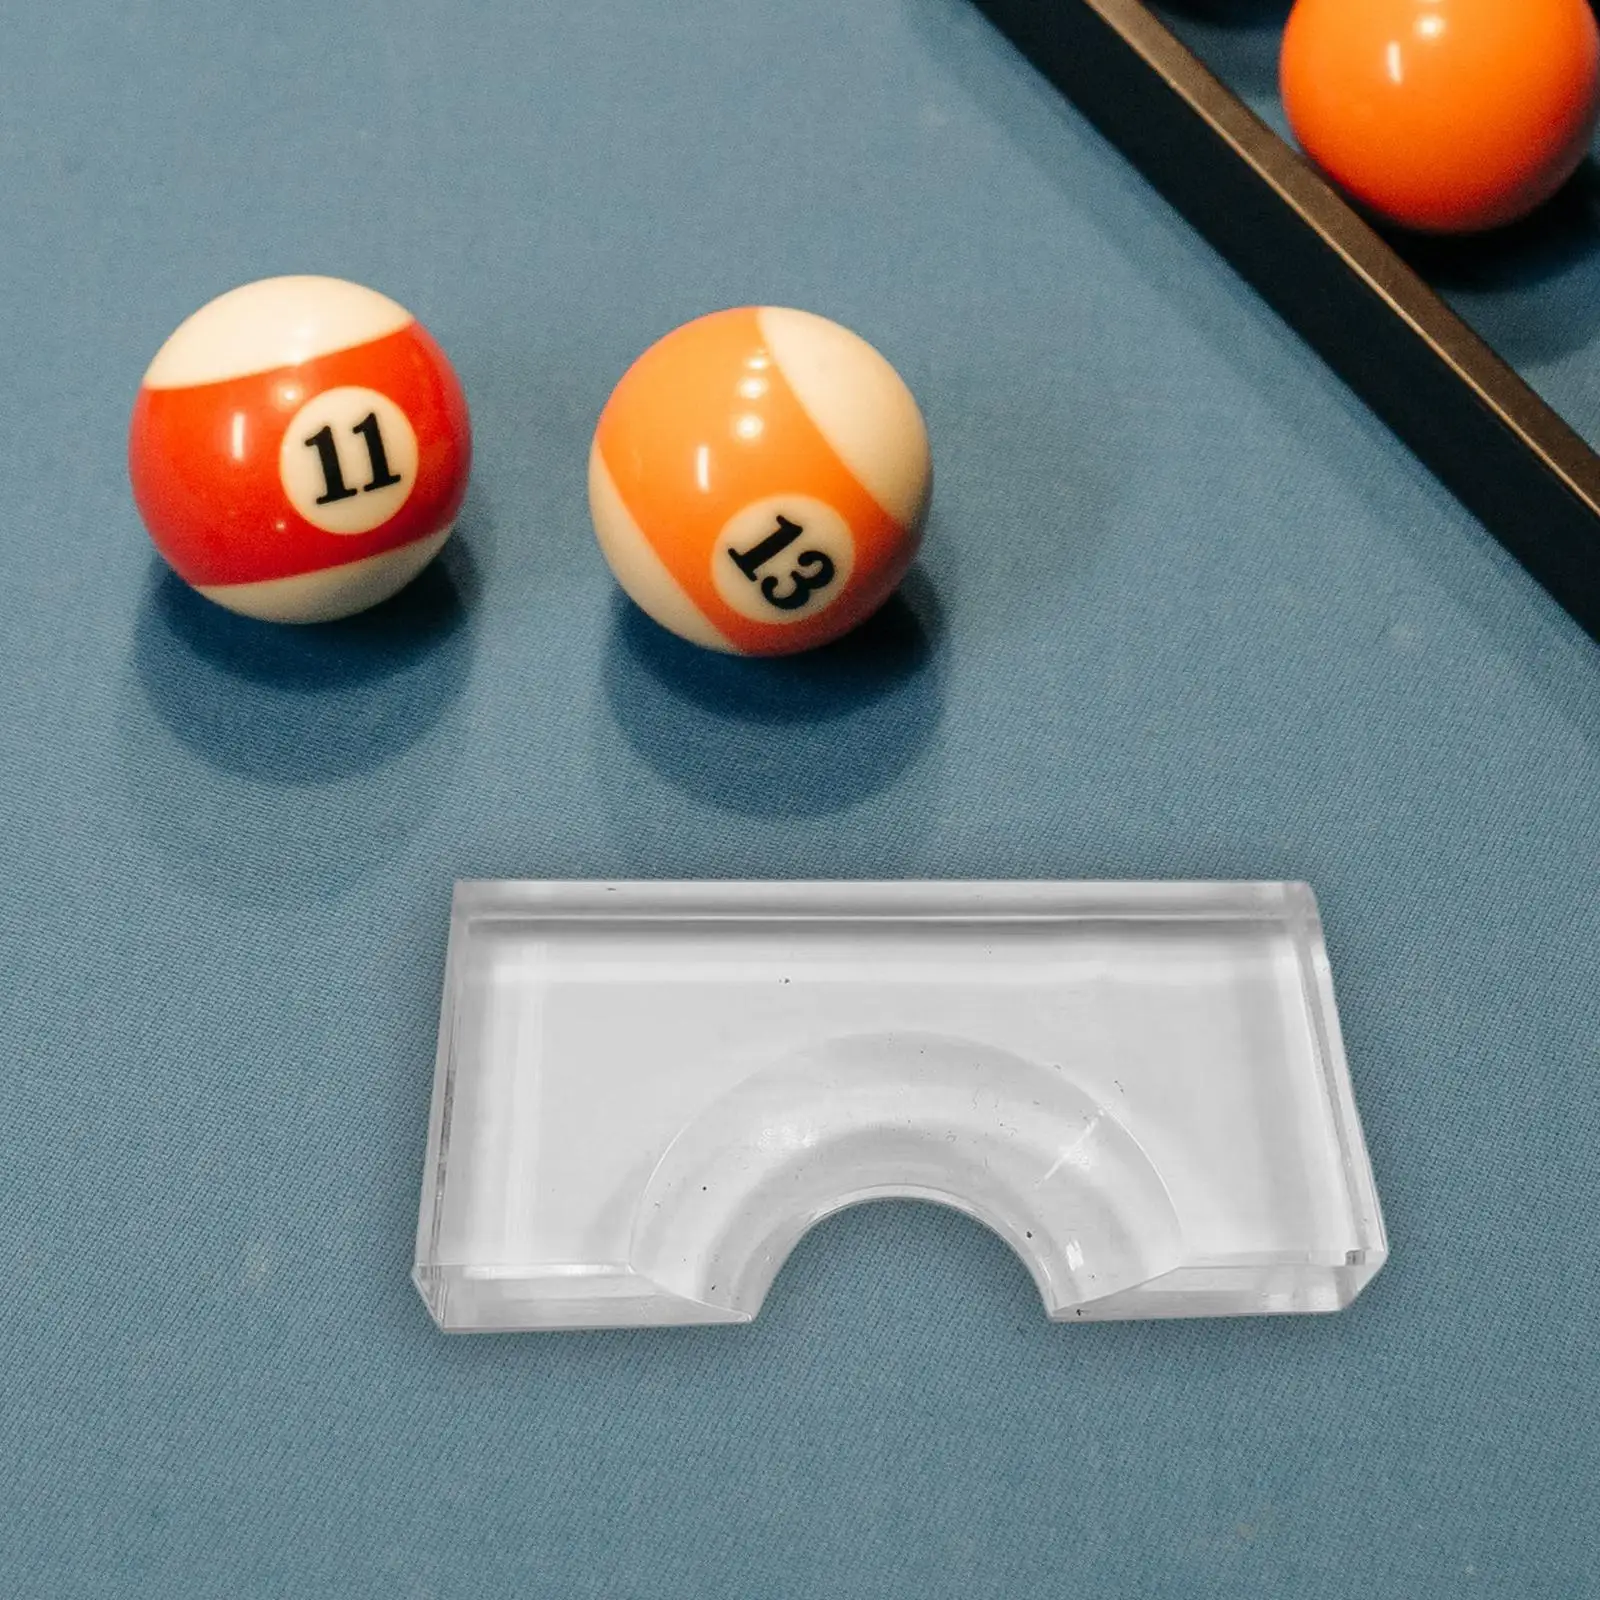 Acrylic Snooker Ball Holder, Table Snooker Ball Positioning, Transparent Billiard Balls Position Marker for Home Entertaining